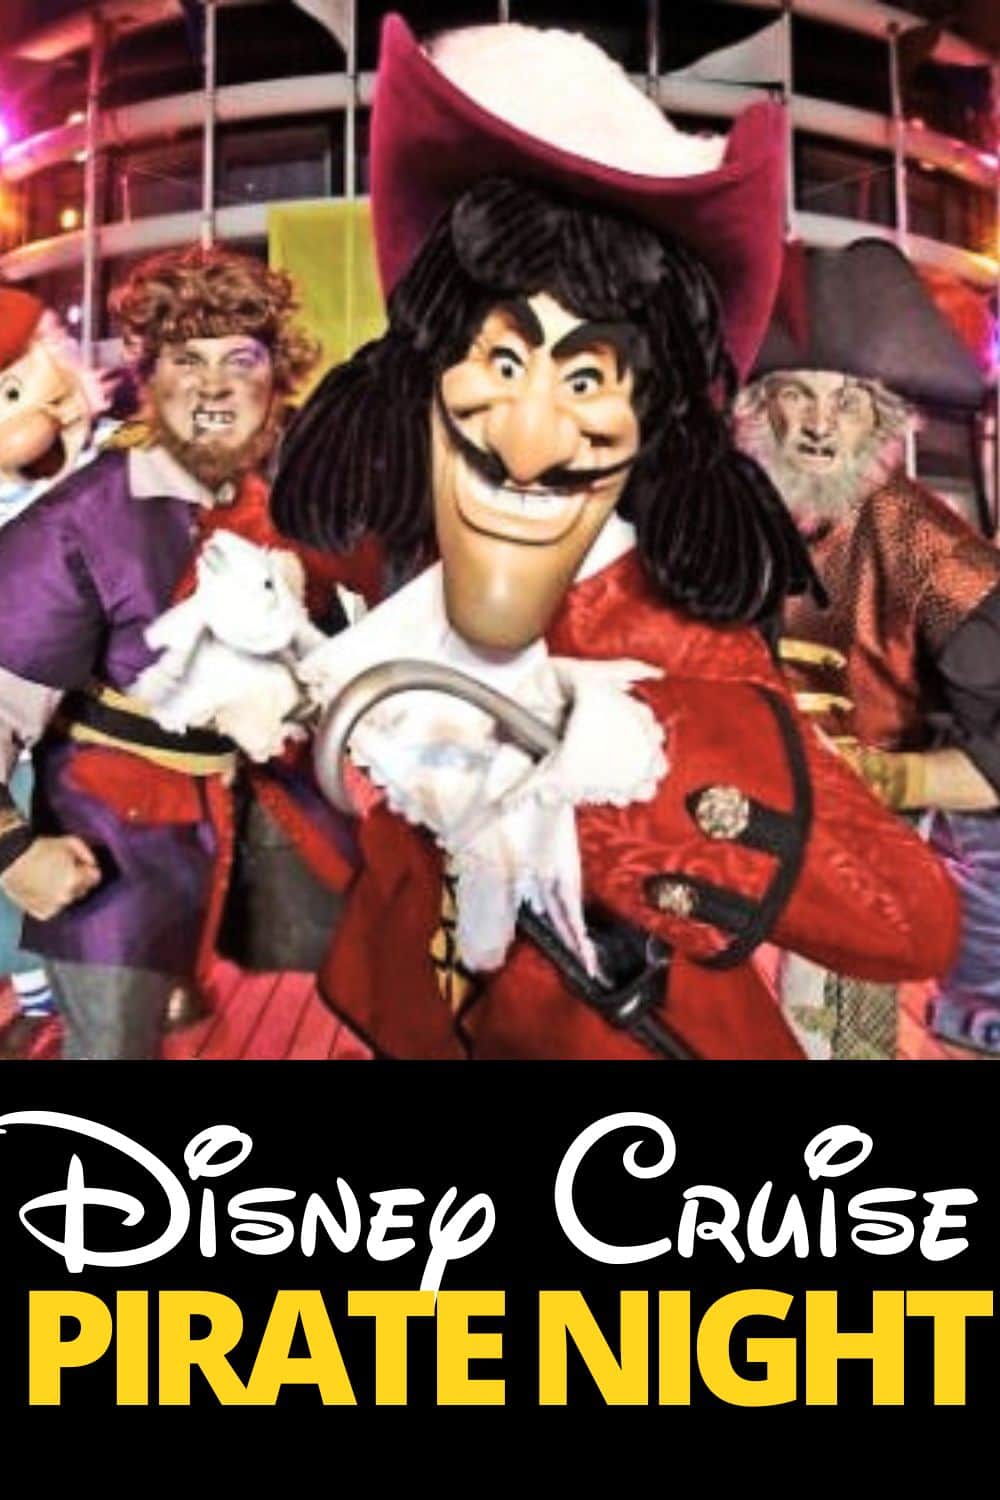 Disney Cruise Pirate Night 